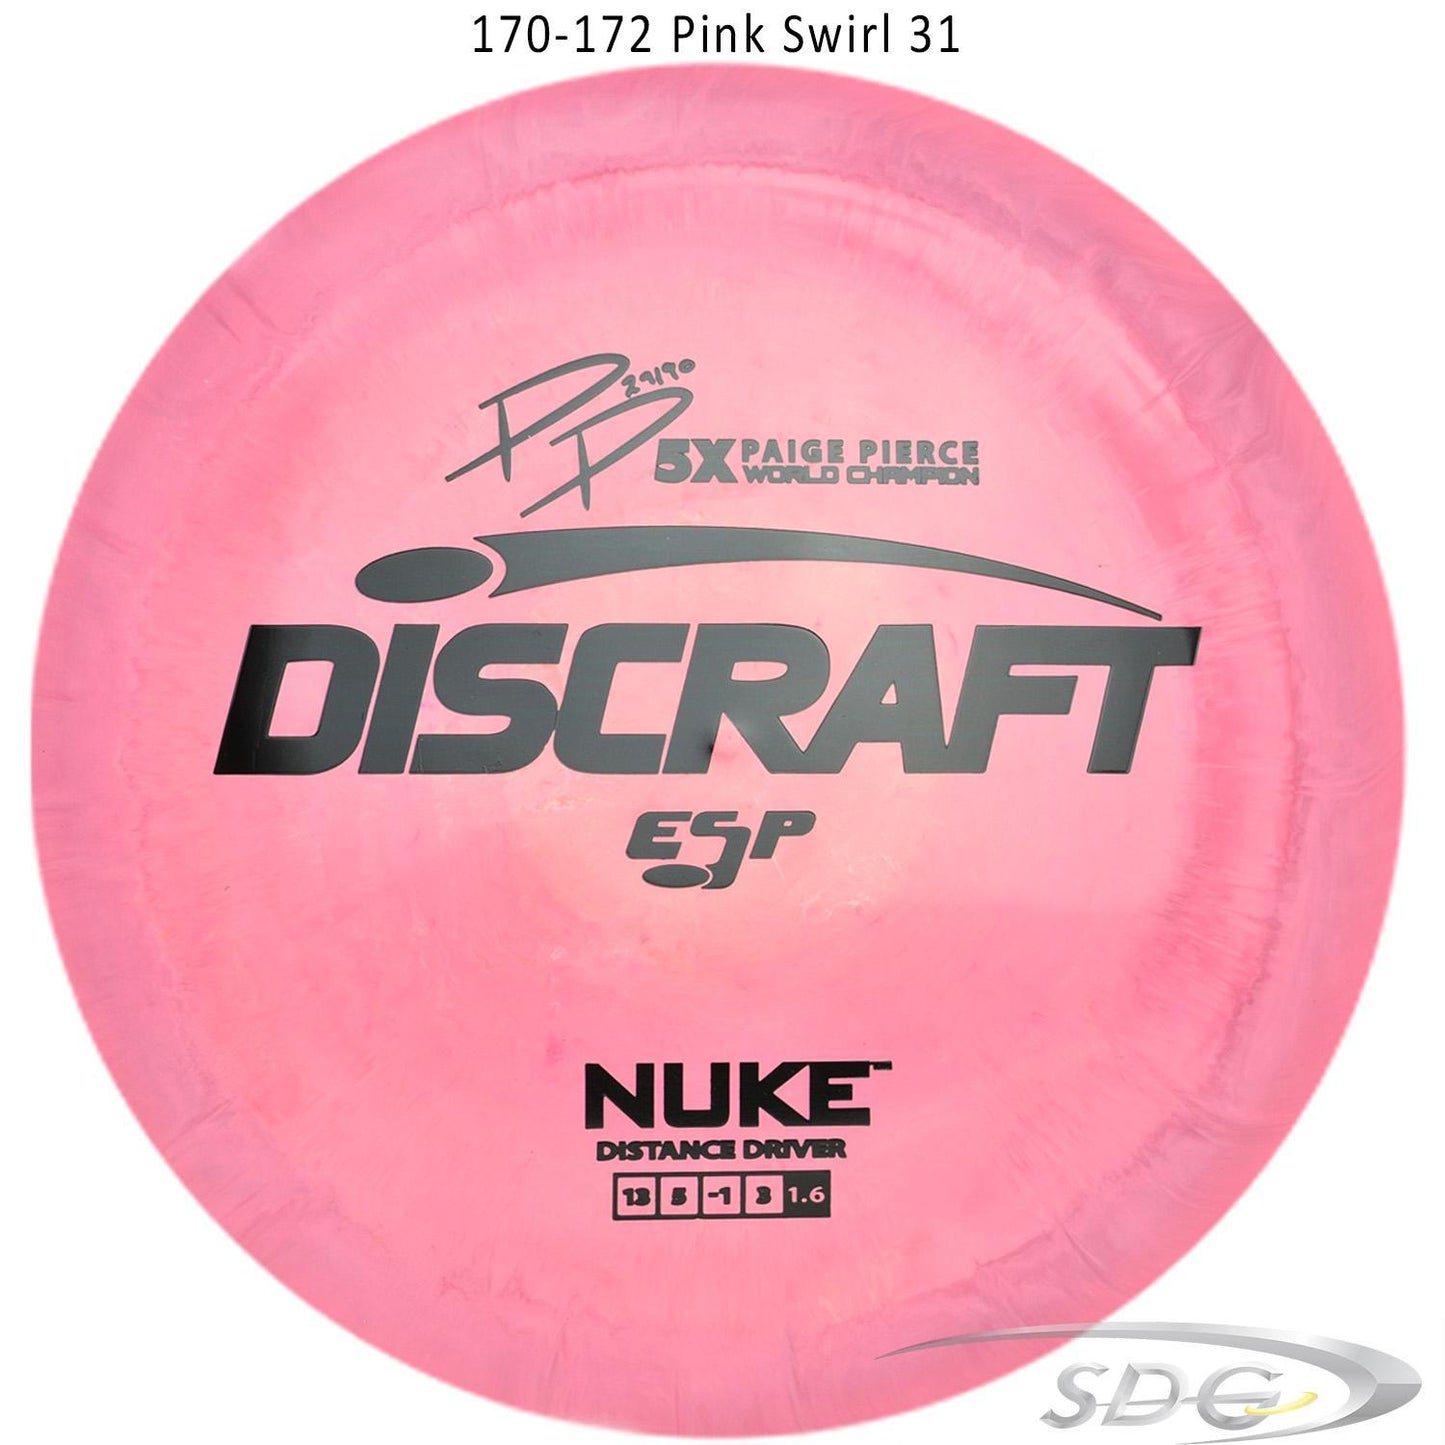 discraft-esp-nuke-paige-pierce-signature-disc-golf-distance-driver 170-172 Pink Swirl 31